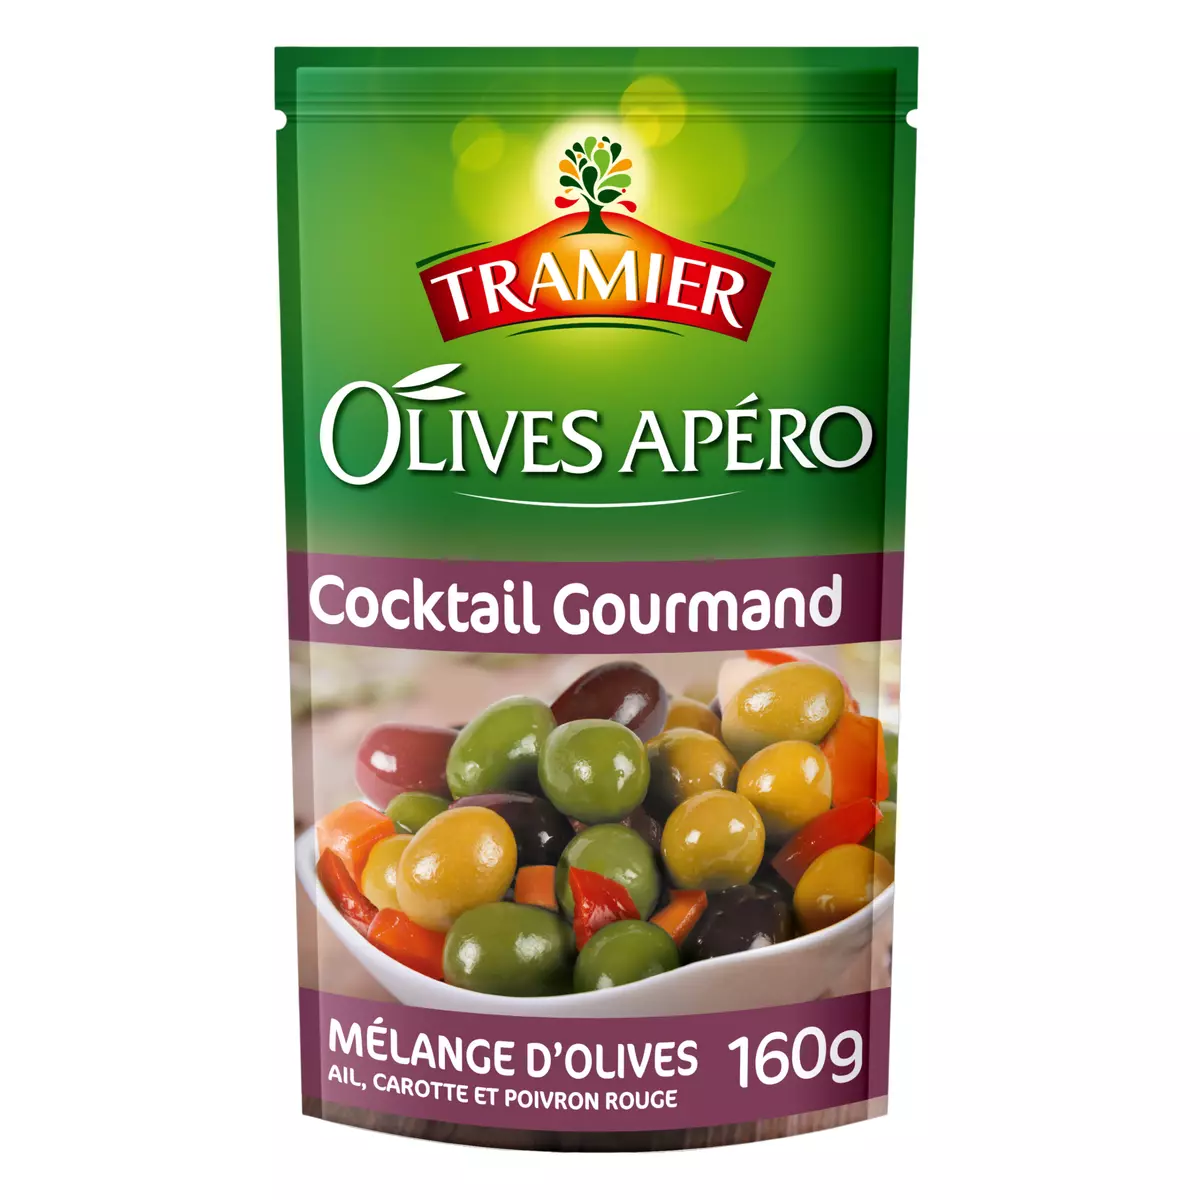 TRAMIER Olives apéro cocktail gourmand en sachet 160g